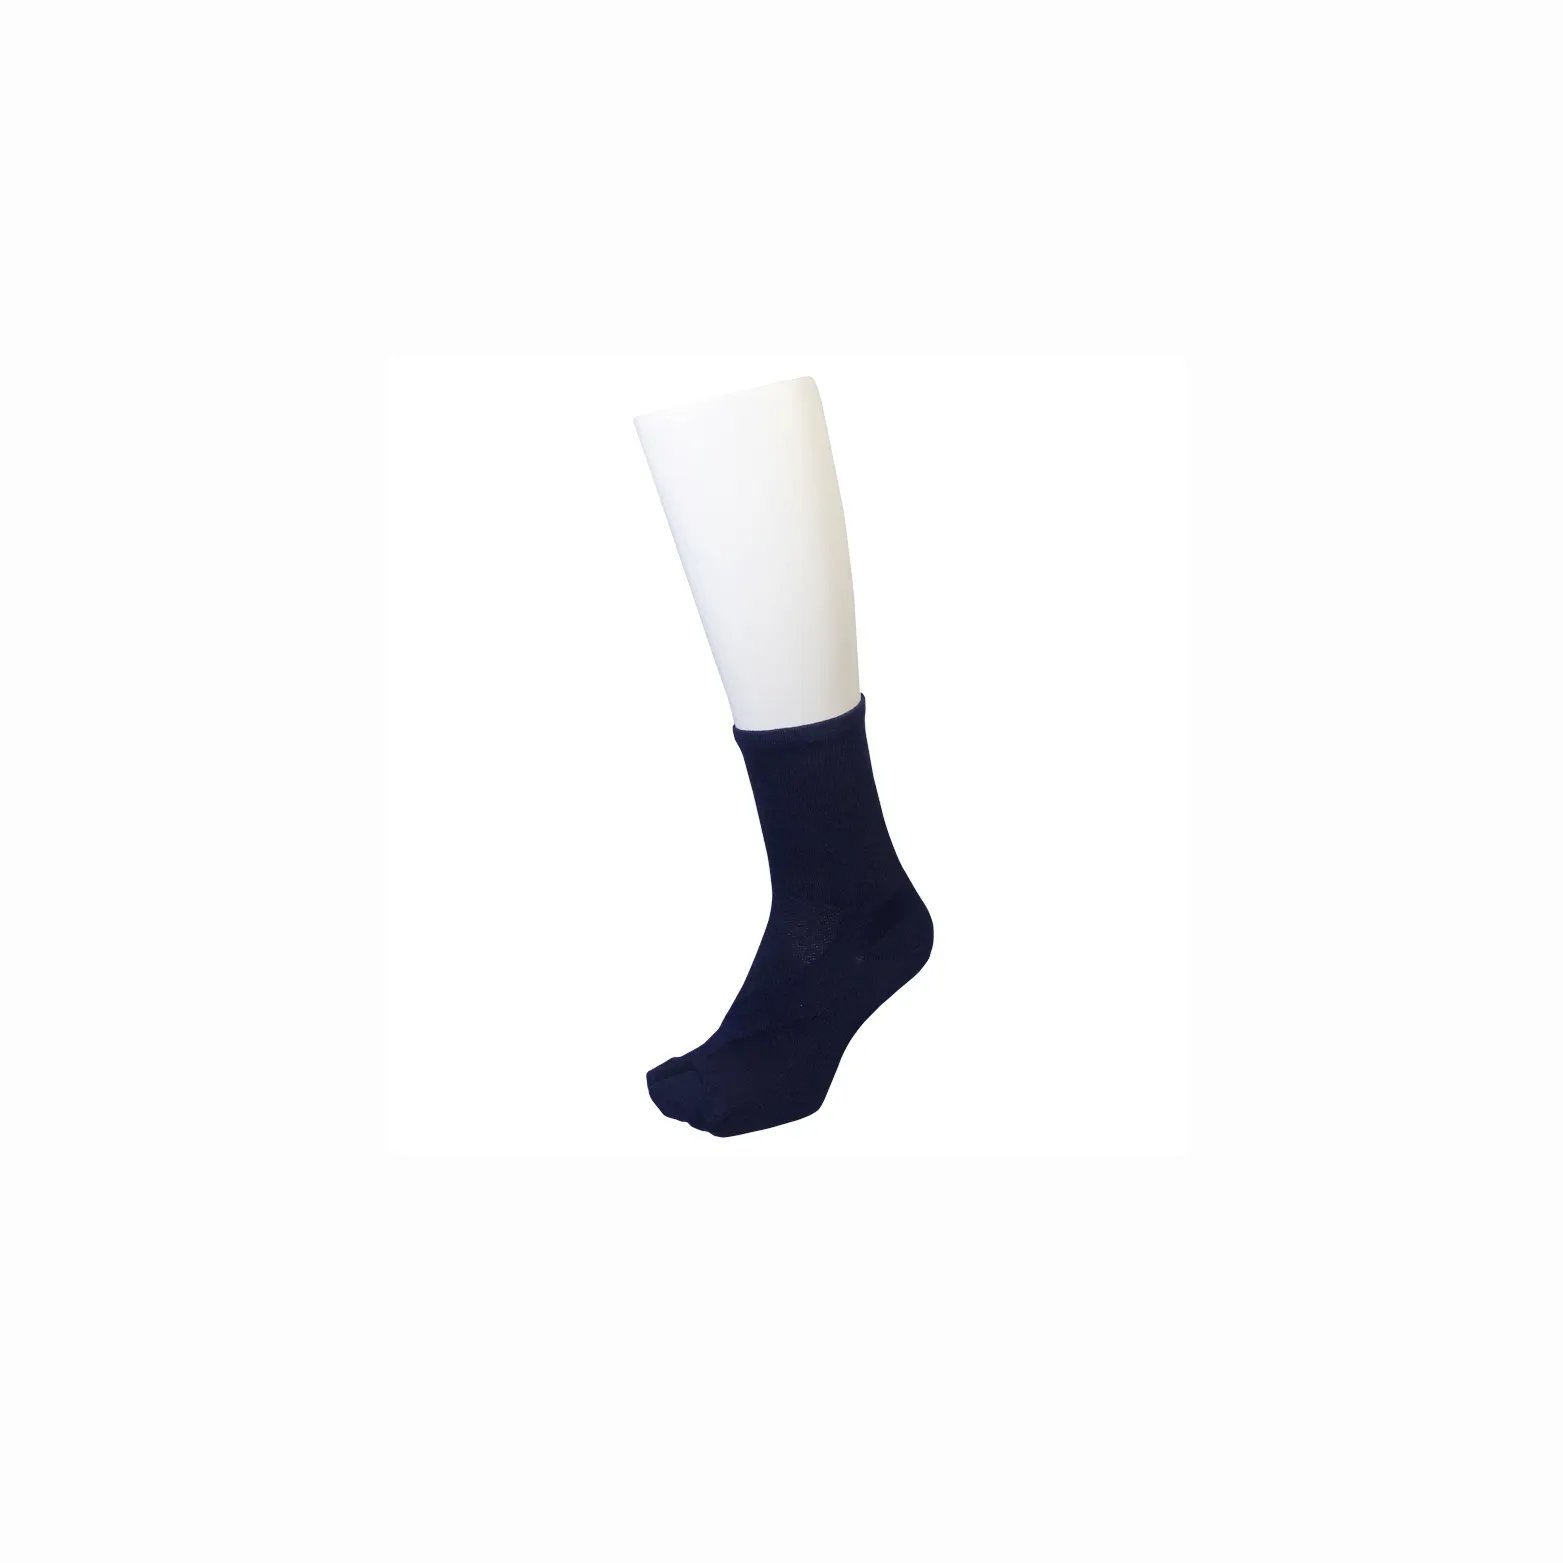 Black high quality men socks custom black cotton to improve stability